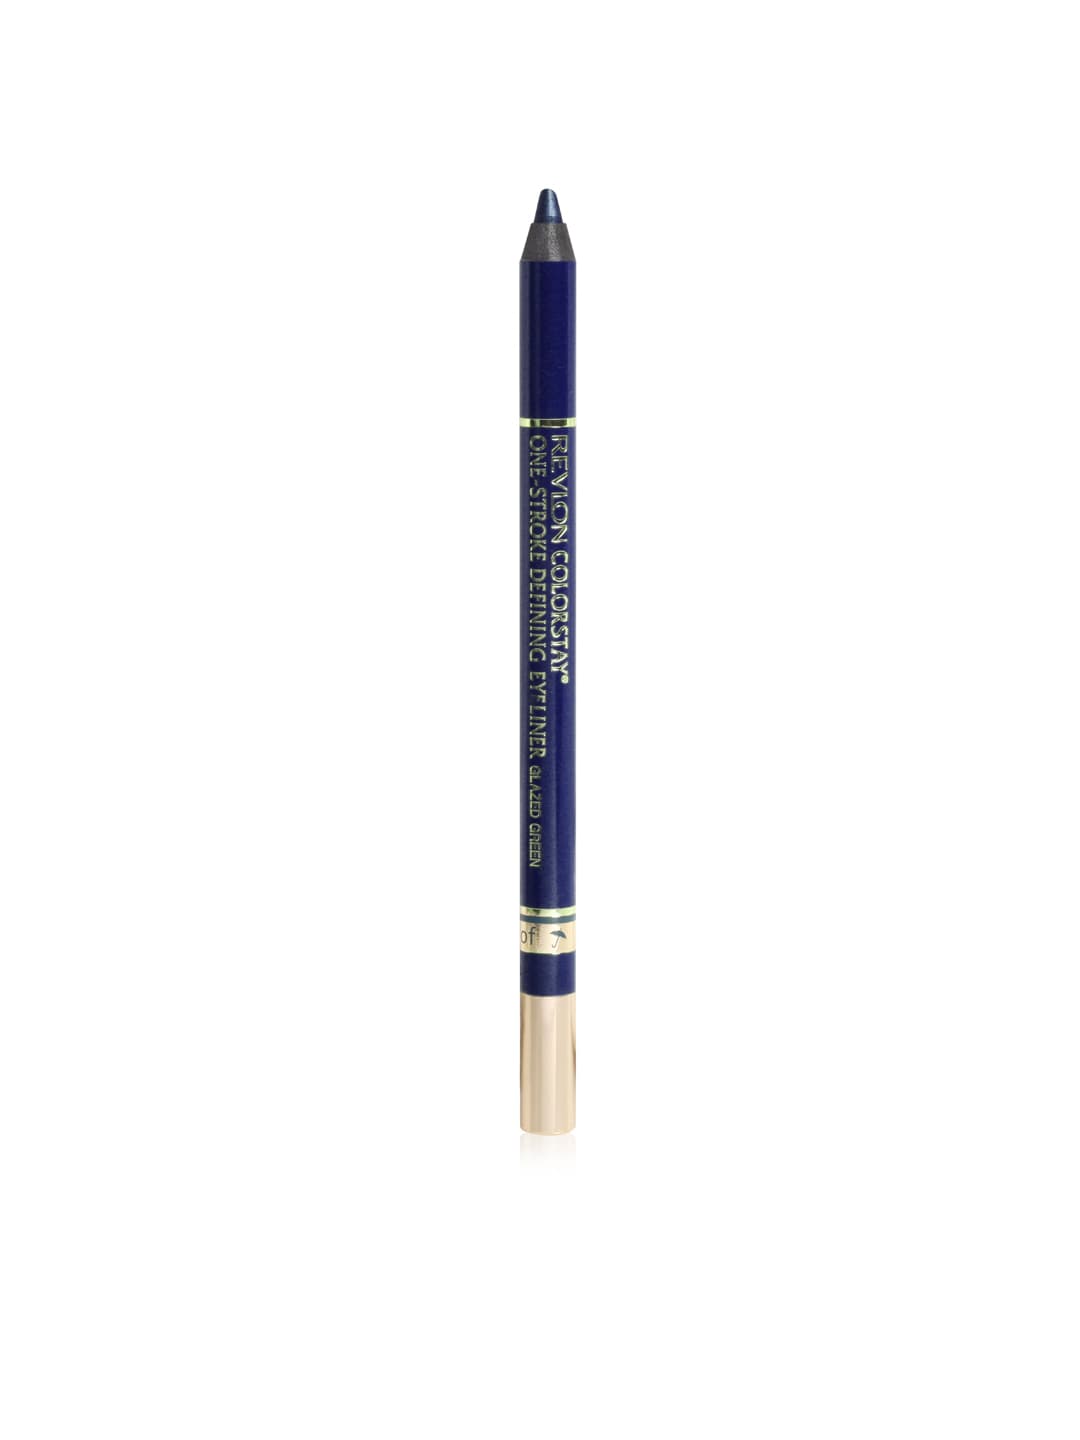 Revlon Colorstay One-Stroke Defining Blooming Blue Eye Pencil